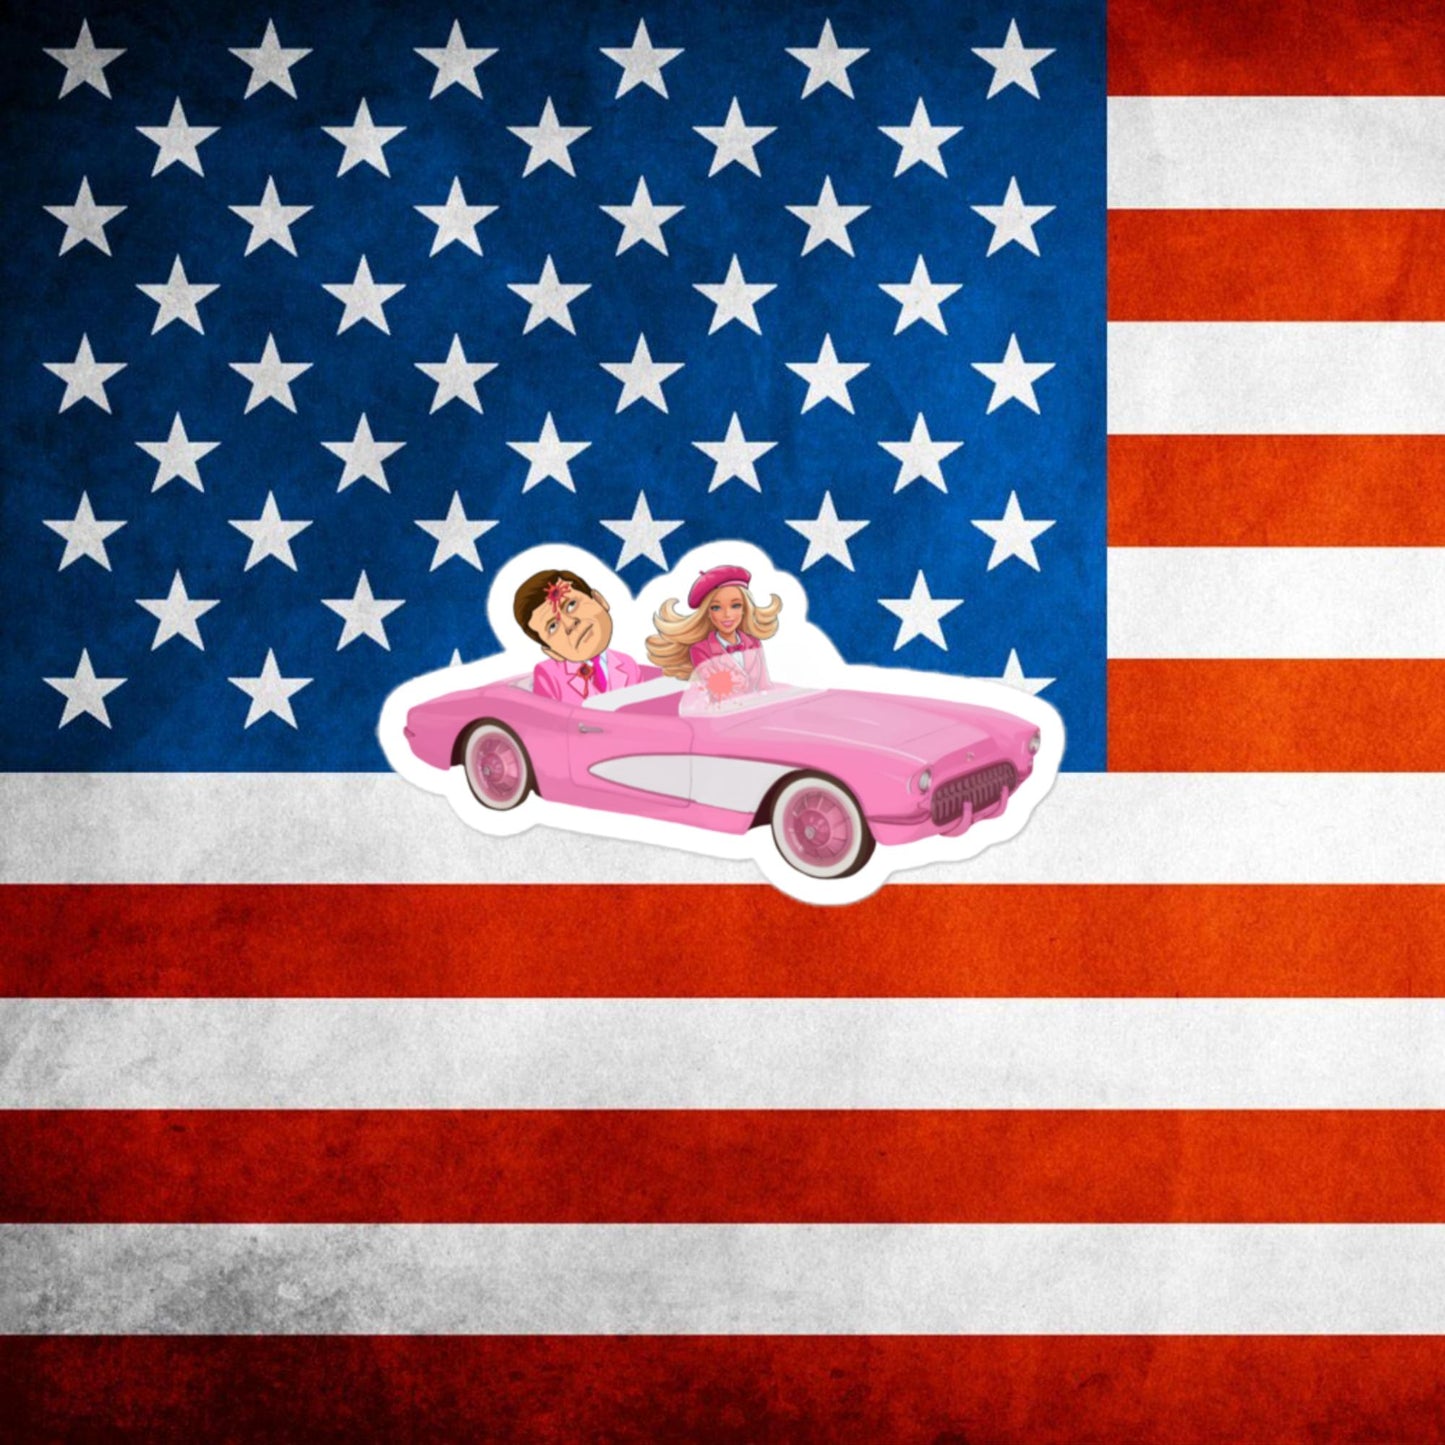 Kennedy JFK Conspiracy Ken Barbie Movie Bubble-free stickers Next Cult Brand